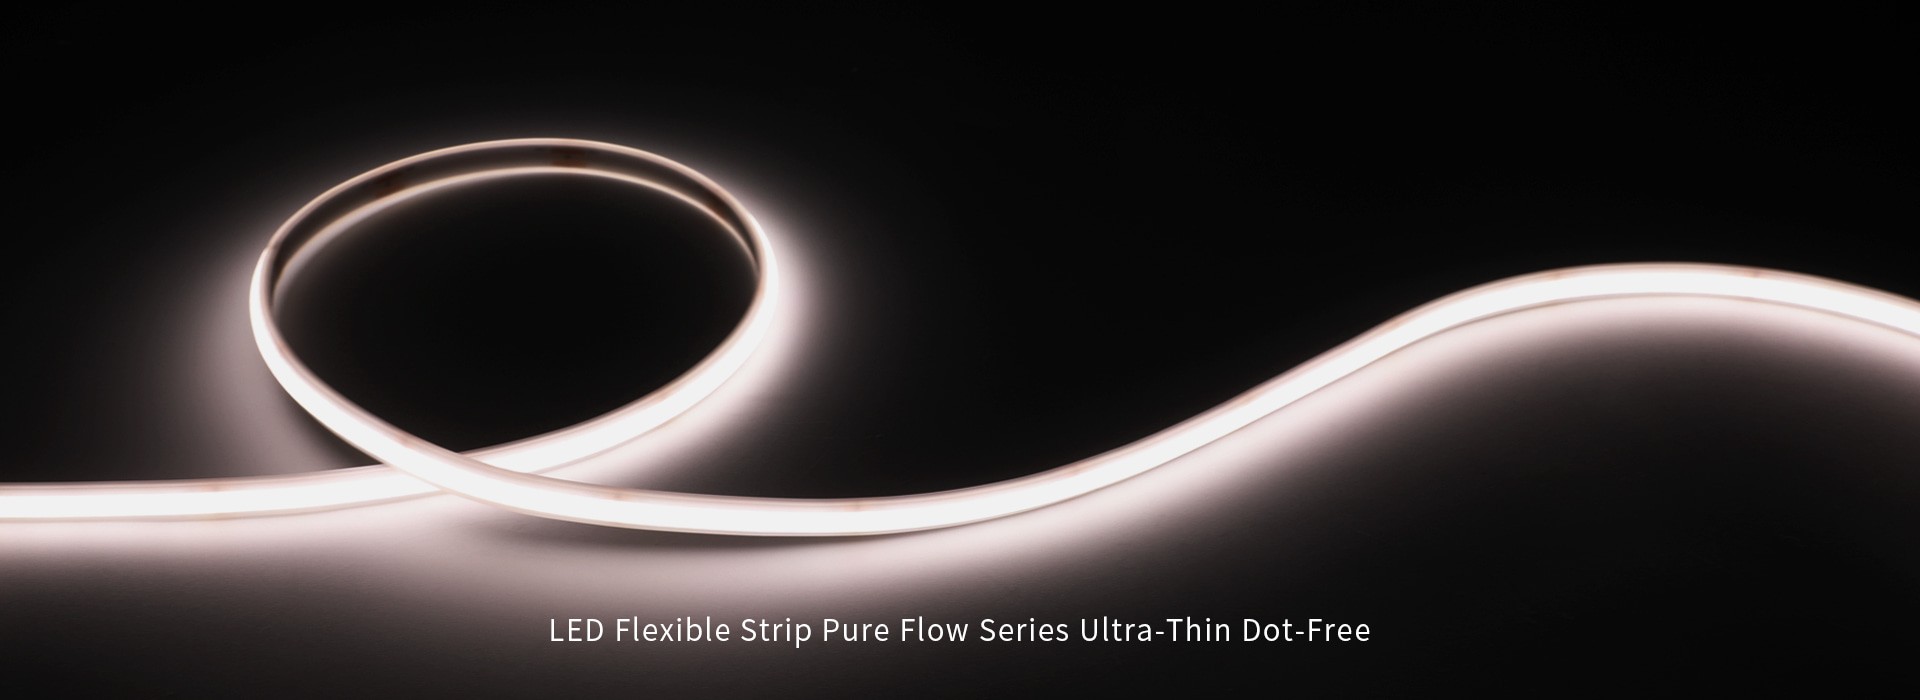 LED Flexible Strip Pure Flow ซีรี่ส์บางพิเศษไร้จุด